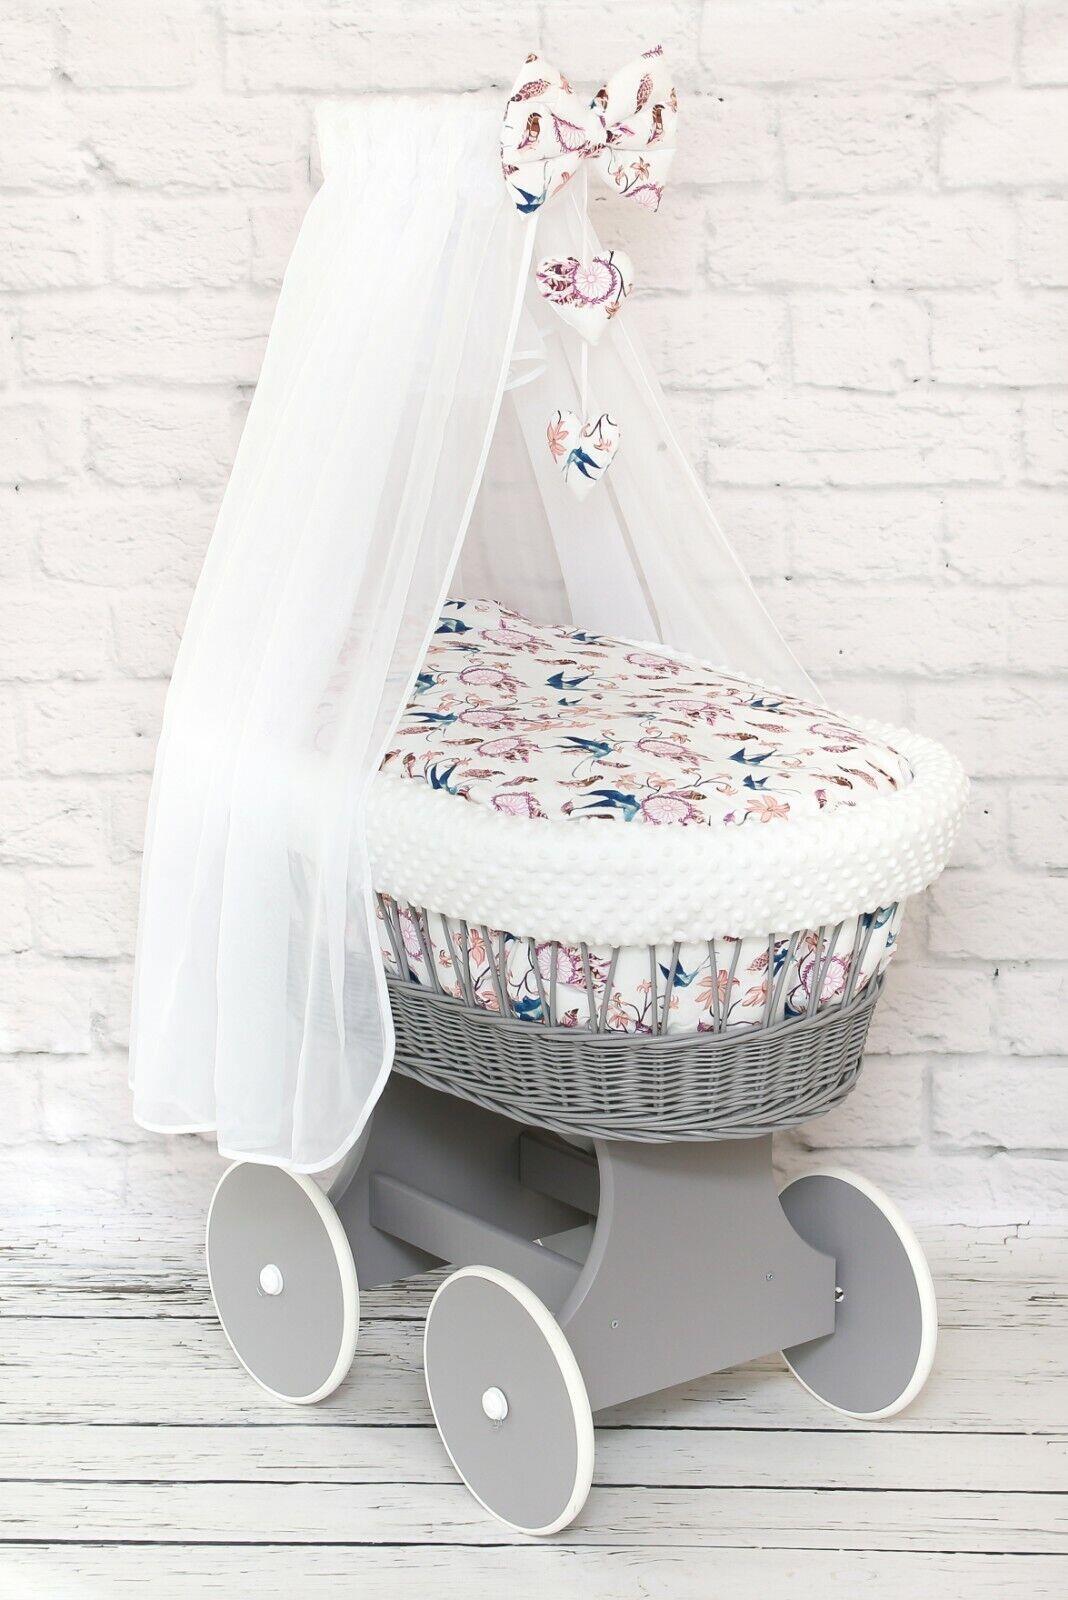 Grey Wicker Wheels Moses Basket Baby+Full Bedding Set Dream catcher birds - white dimple